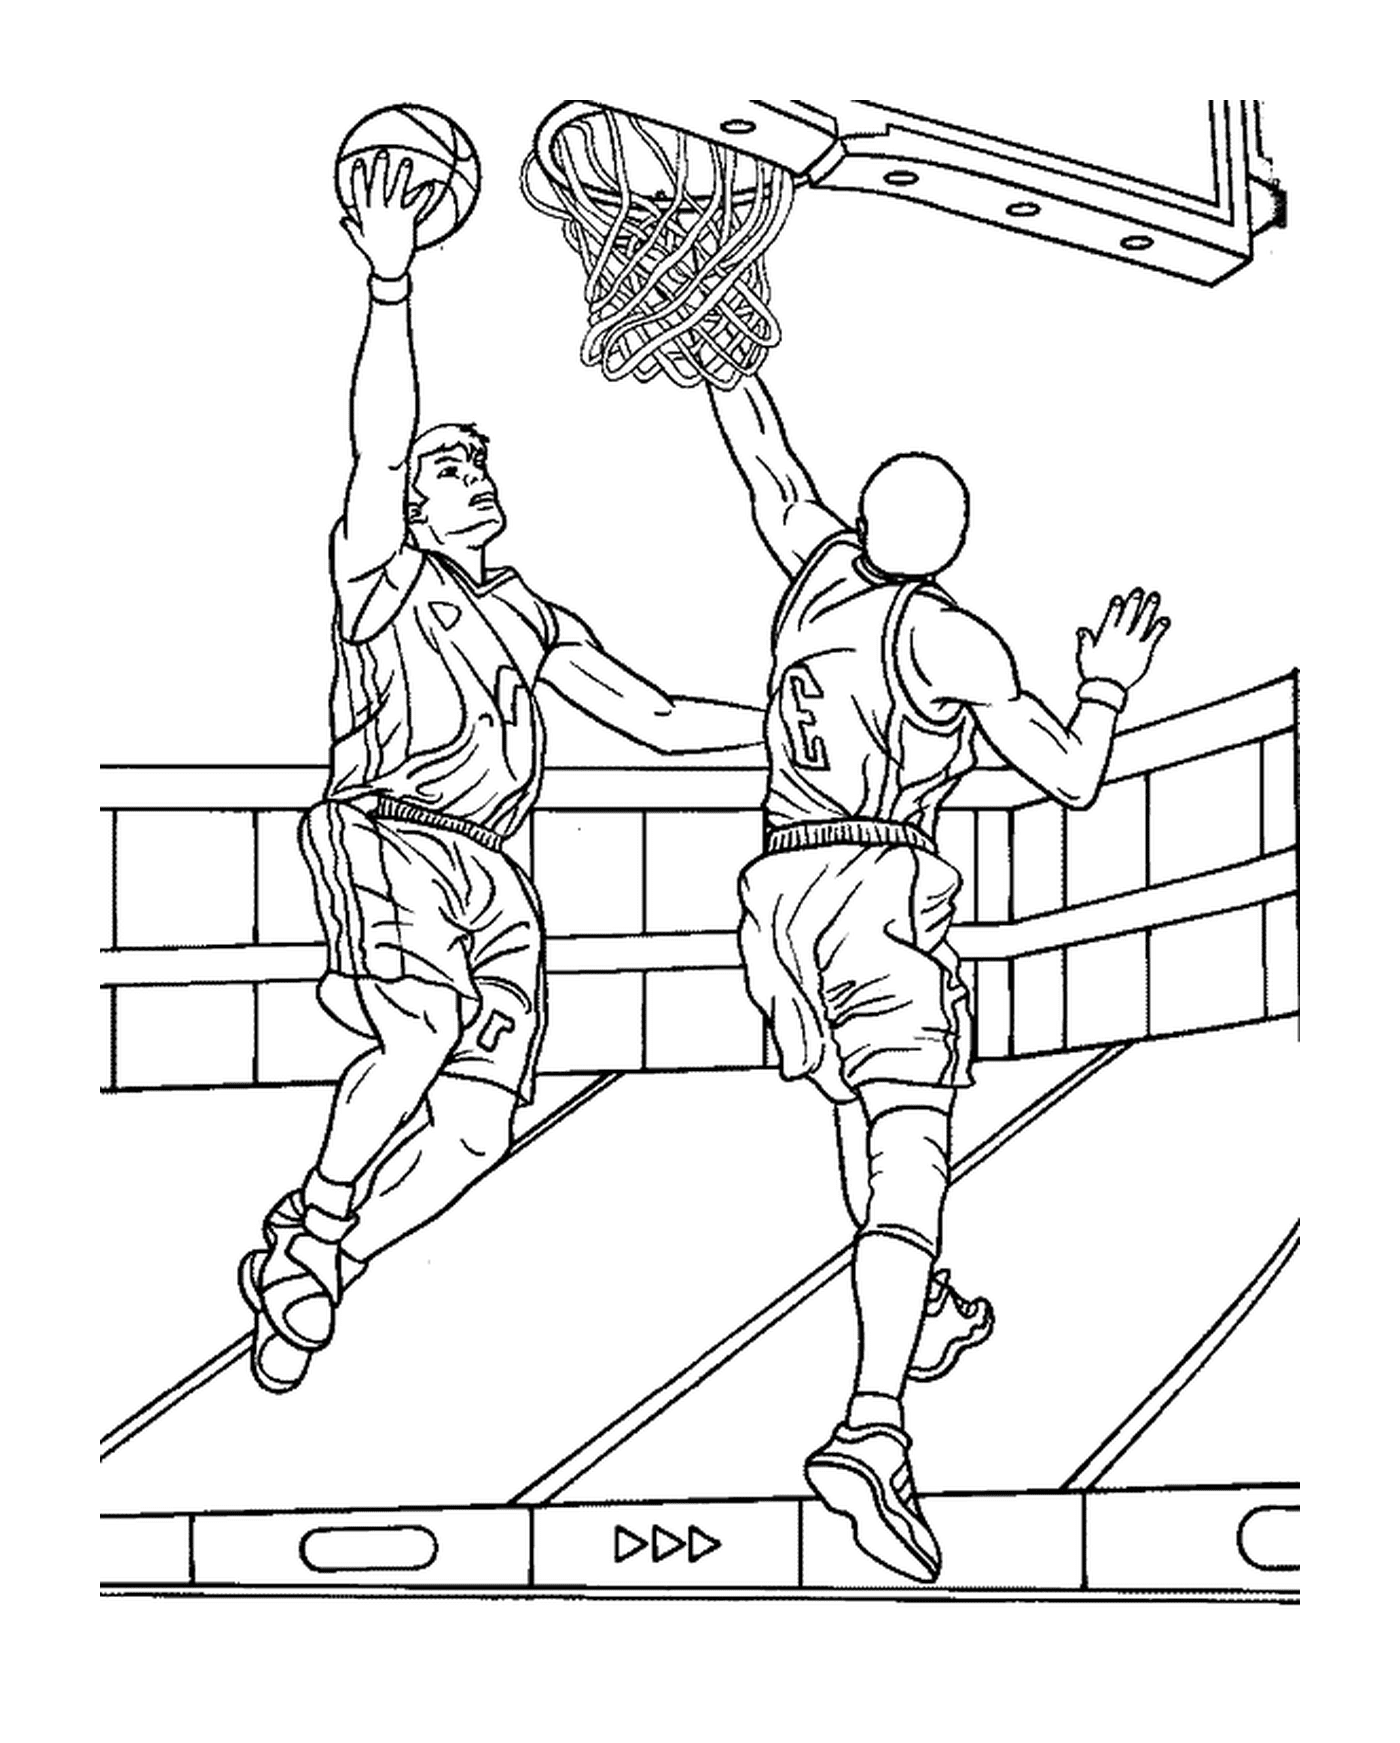  Баскетболист наберет корзину, несмотря на защитника 